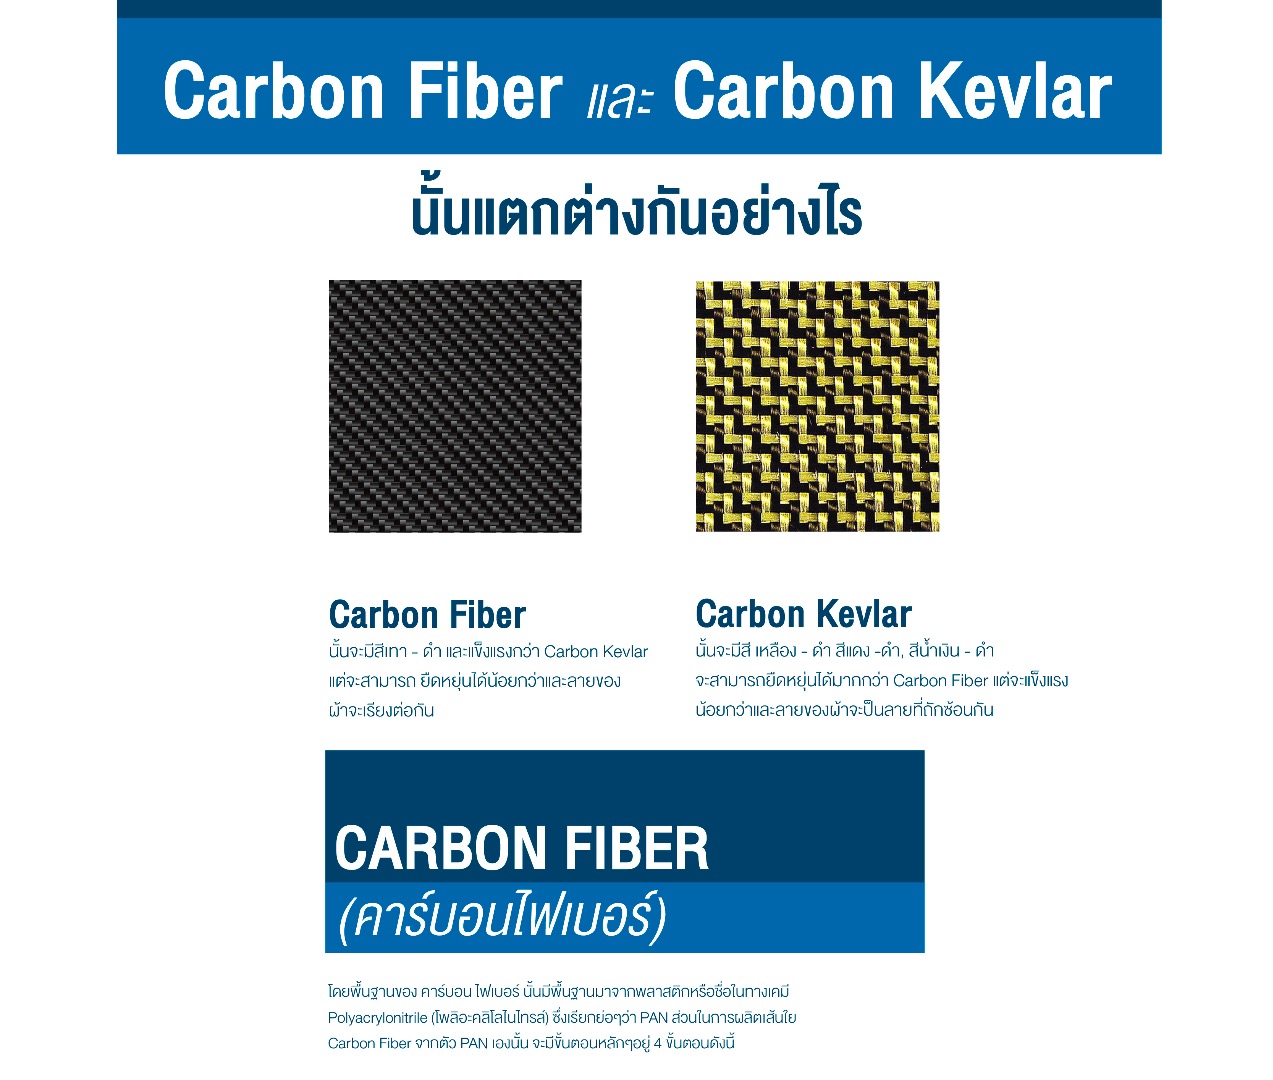 Carbon Fiber and Carbon Kevlar